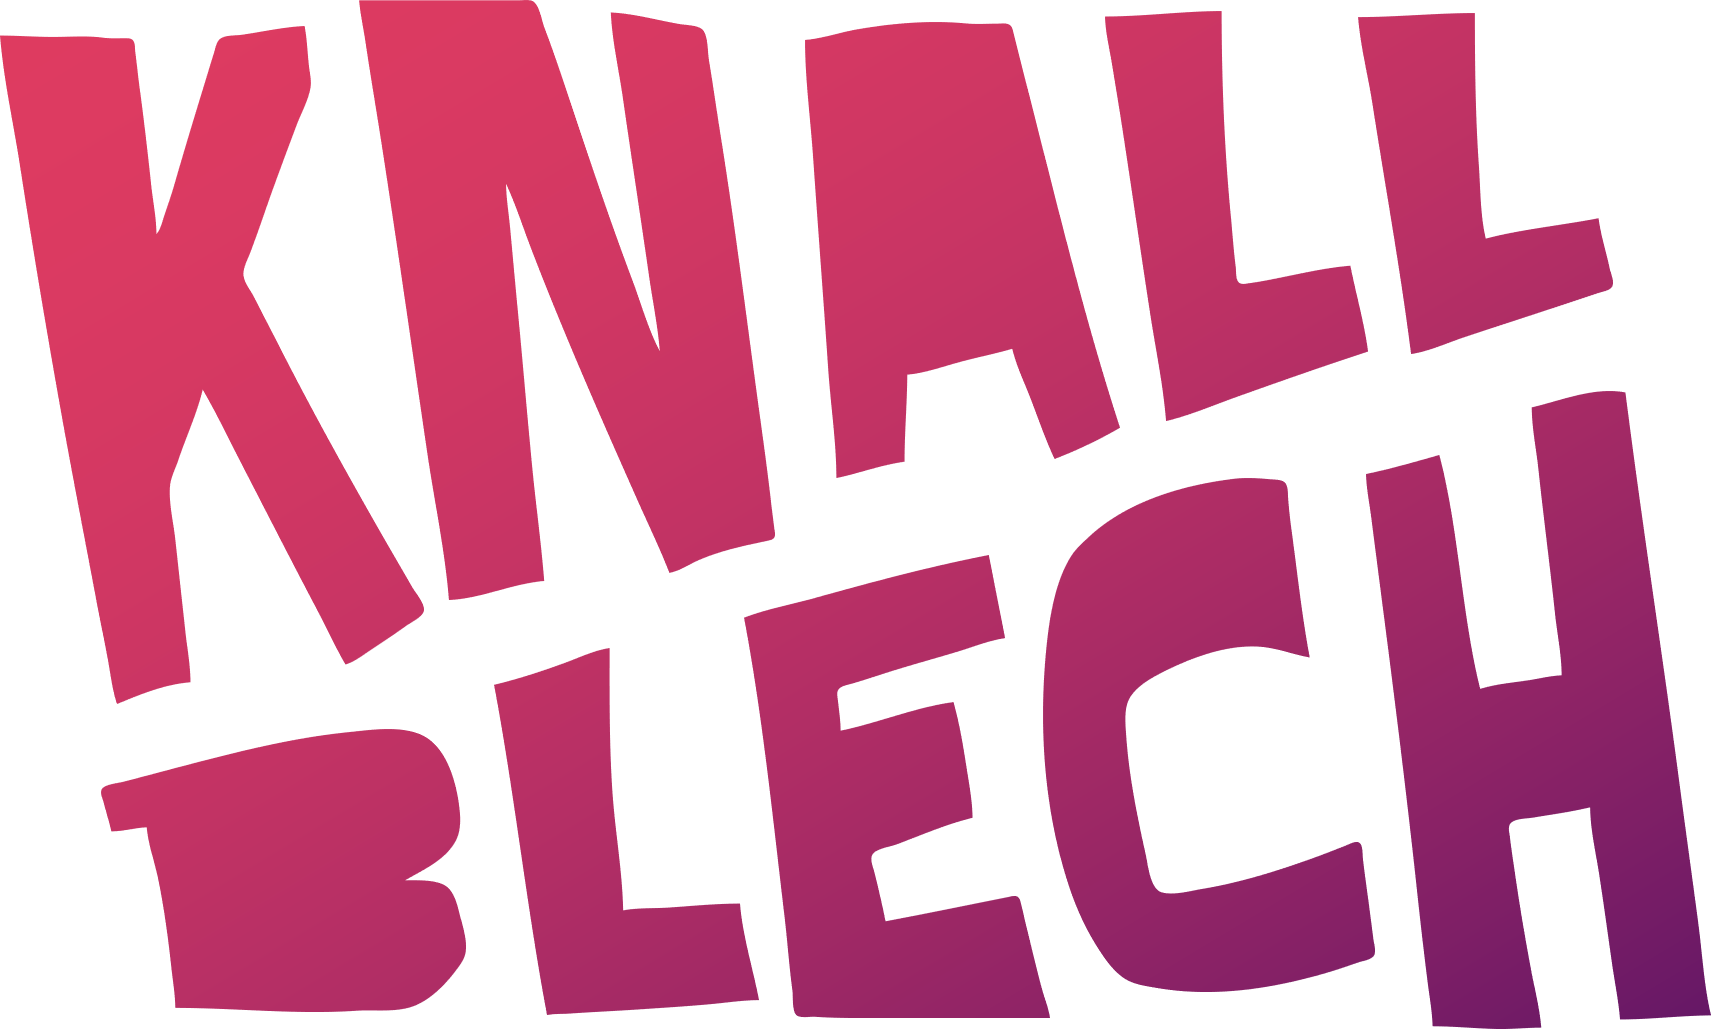 Knallblech logo